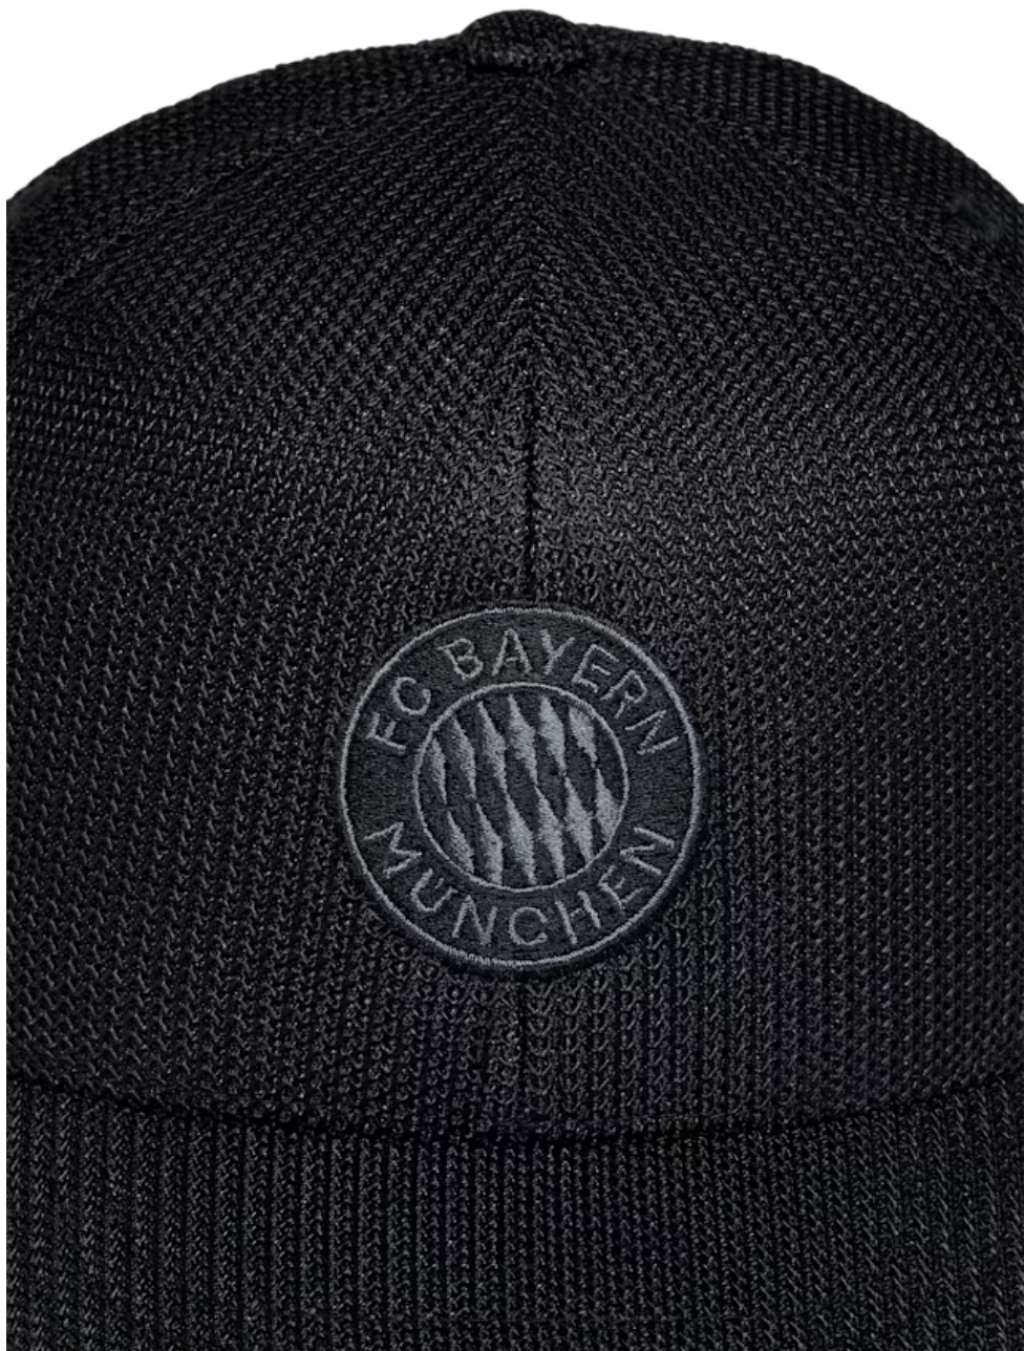 Šiltovka Flex Mesh FC Bayern München, čierna